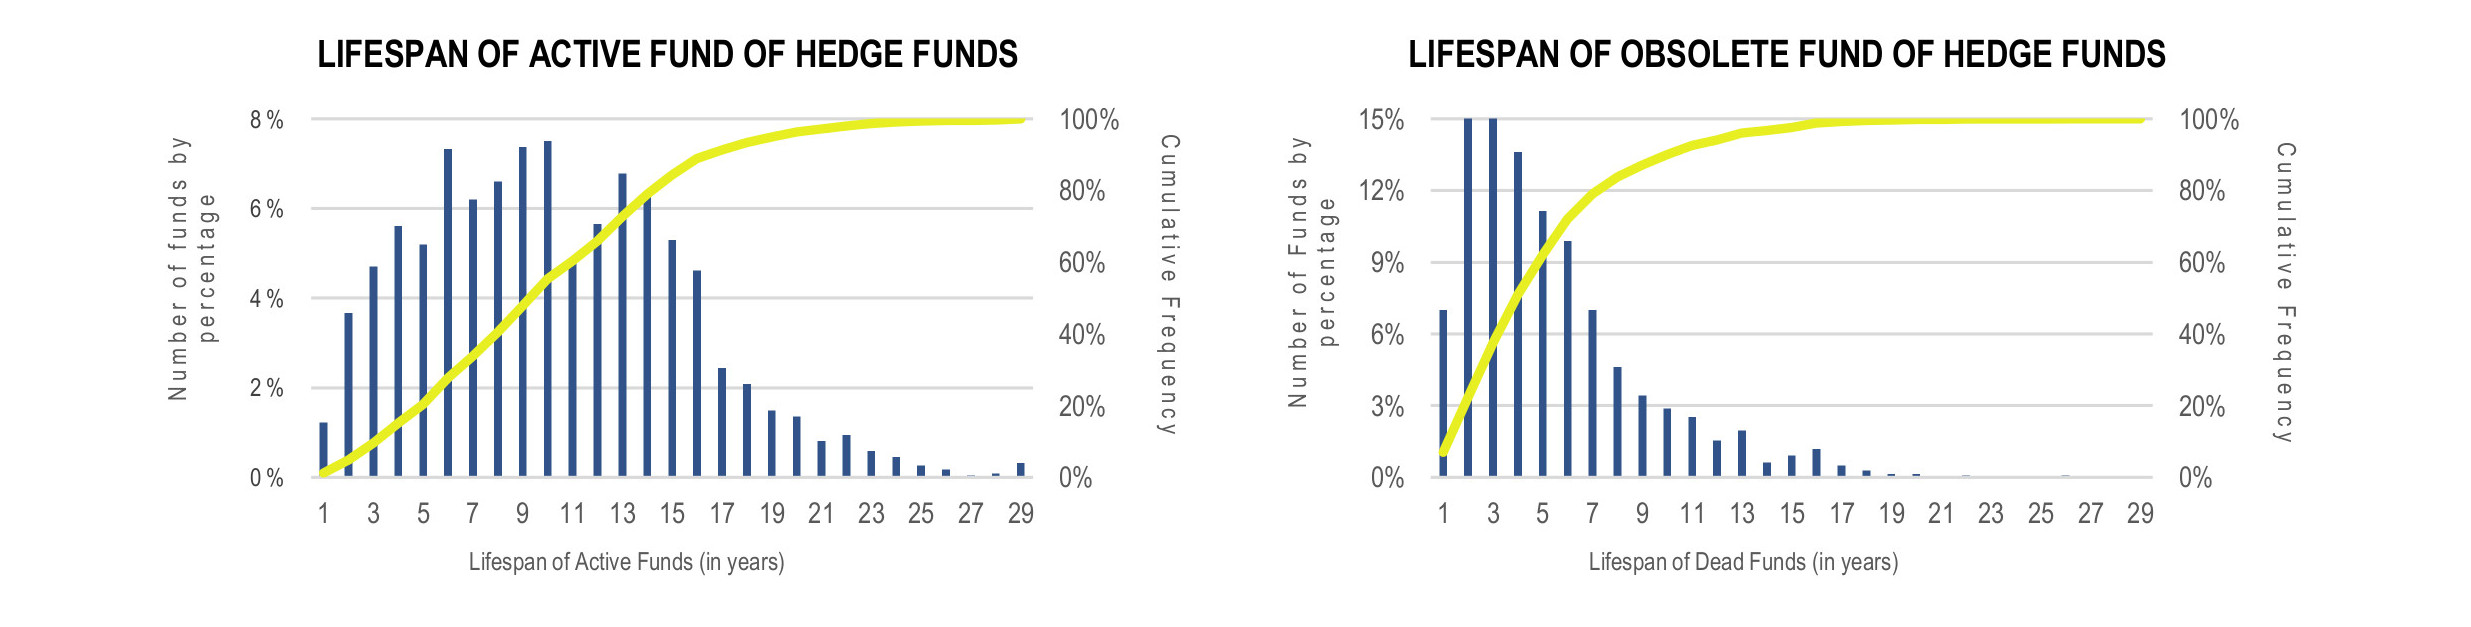 Eurekahedge Hedge Fund Index